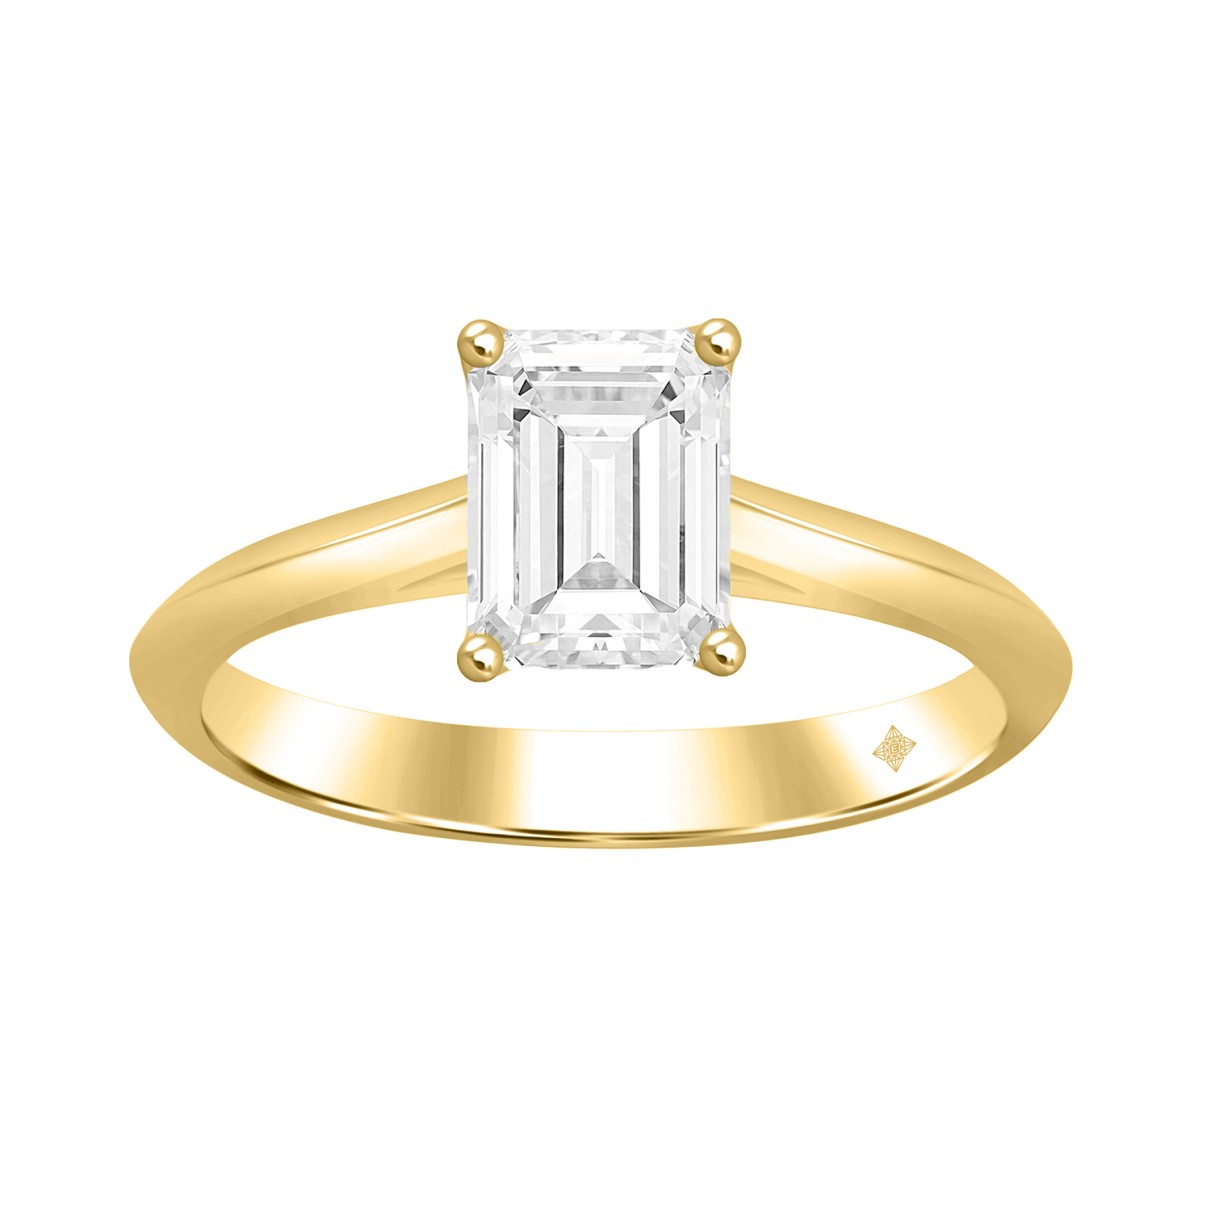 LADIES SOLITAIRE RING 2 1/2CT EMERALD DIAMOND 14K YELLOW GOLD (CENTER STONE EMERALD DIAMOND 1/2CT )